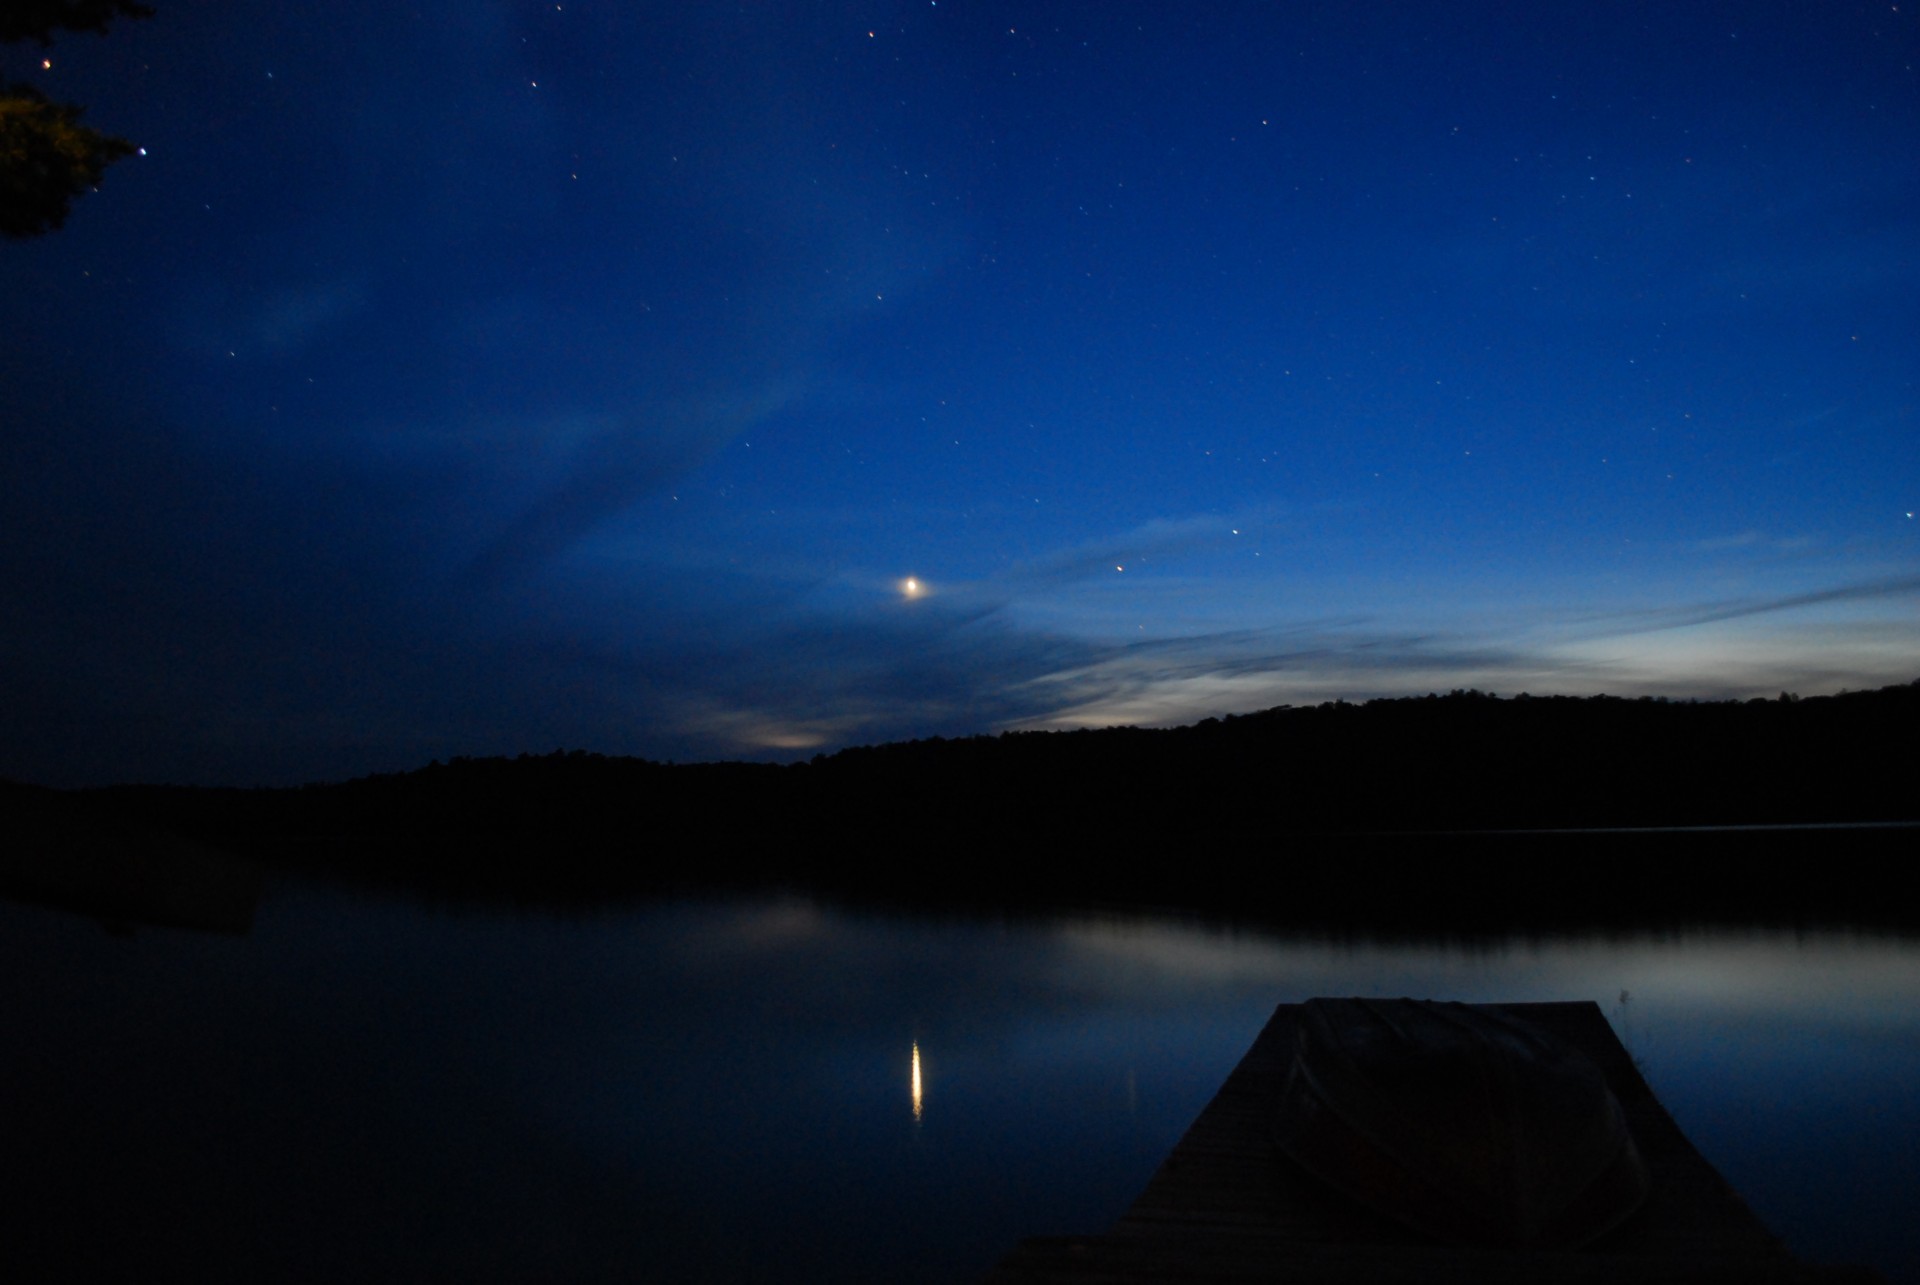 Night lake. Ночное озеро. Озеро ночью. Звездное небо над озером. Ночь озеро звезды.